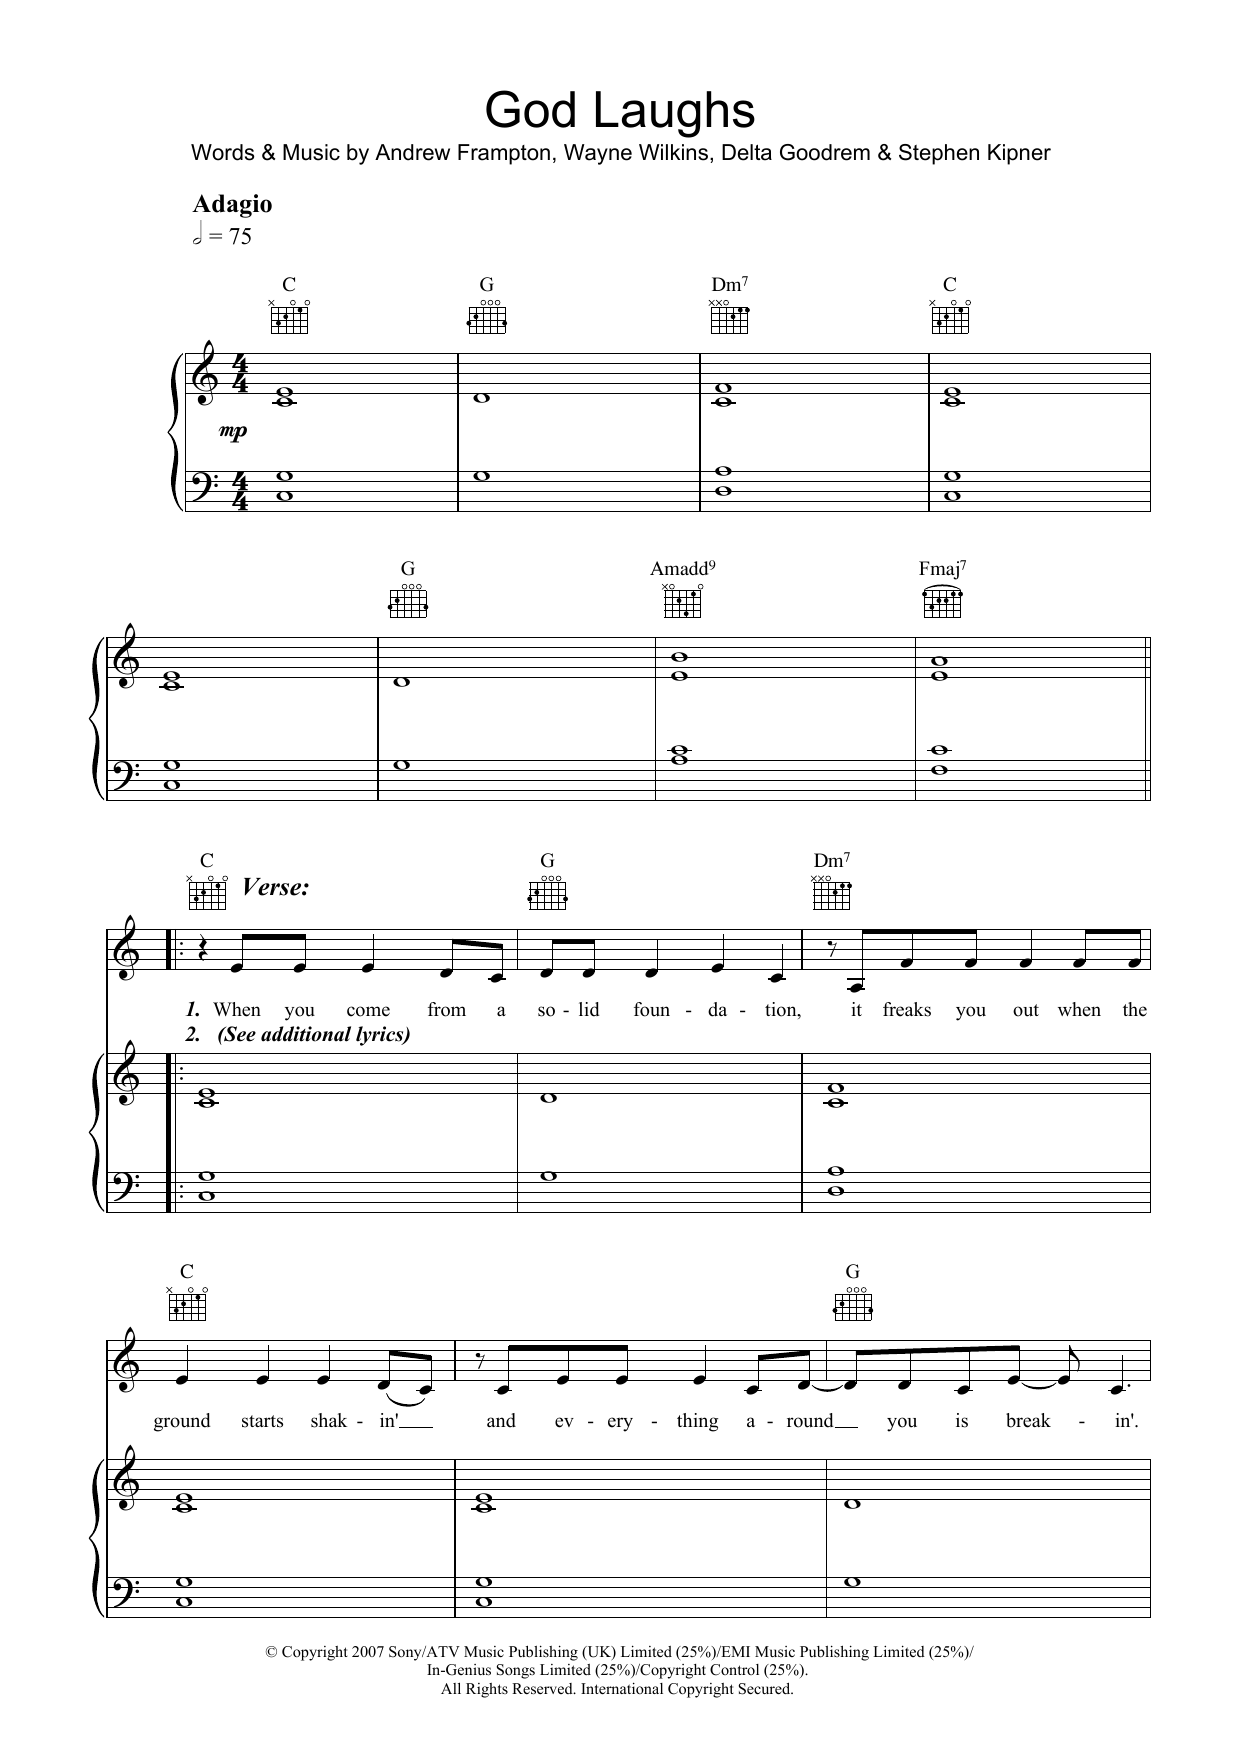 Delta Goodrem God Laughs Sheet Music Notes & Chords for Piano, Vocal & Guitar - Download or Print PDF